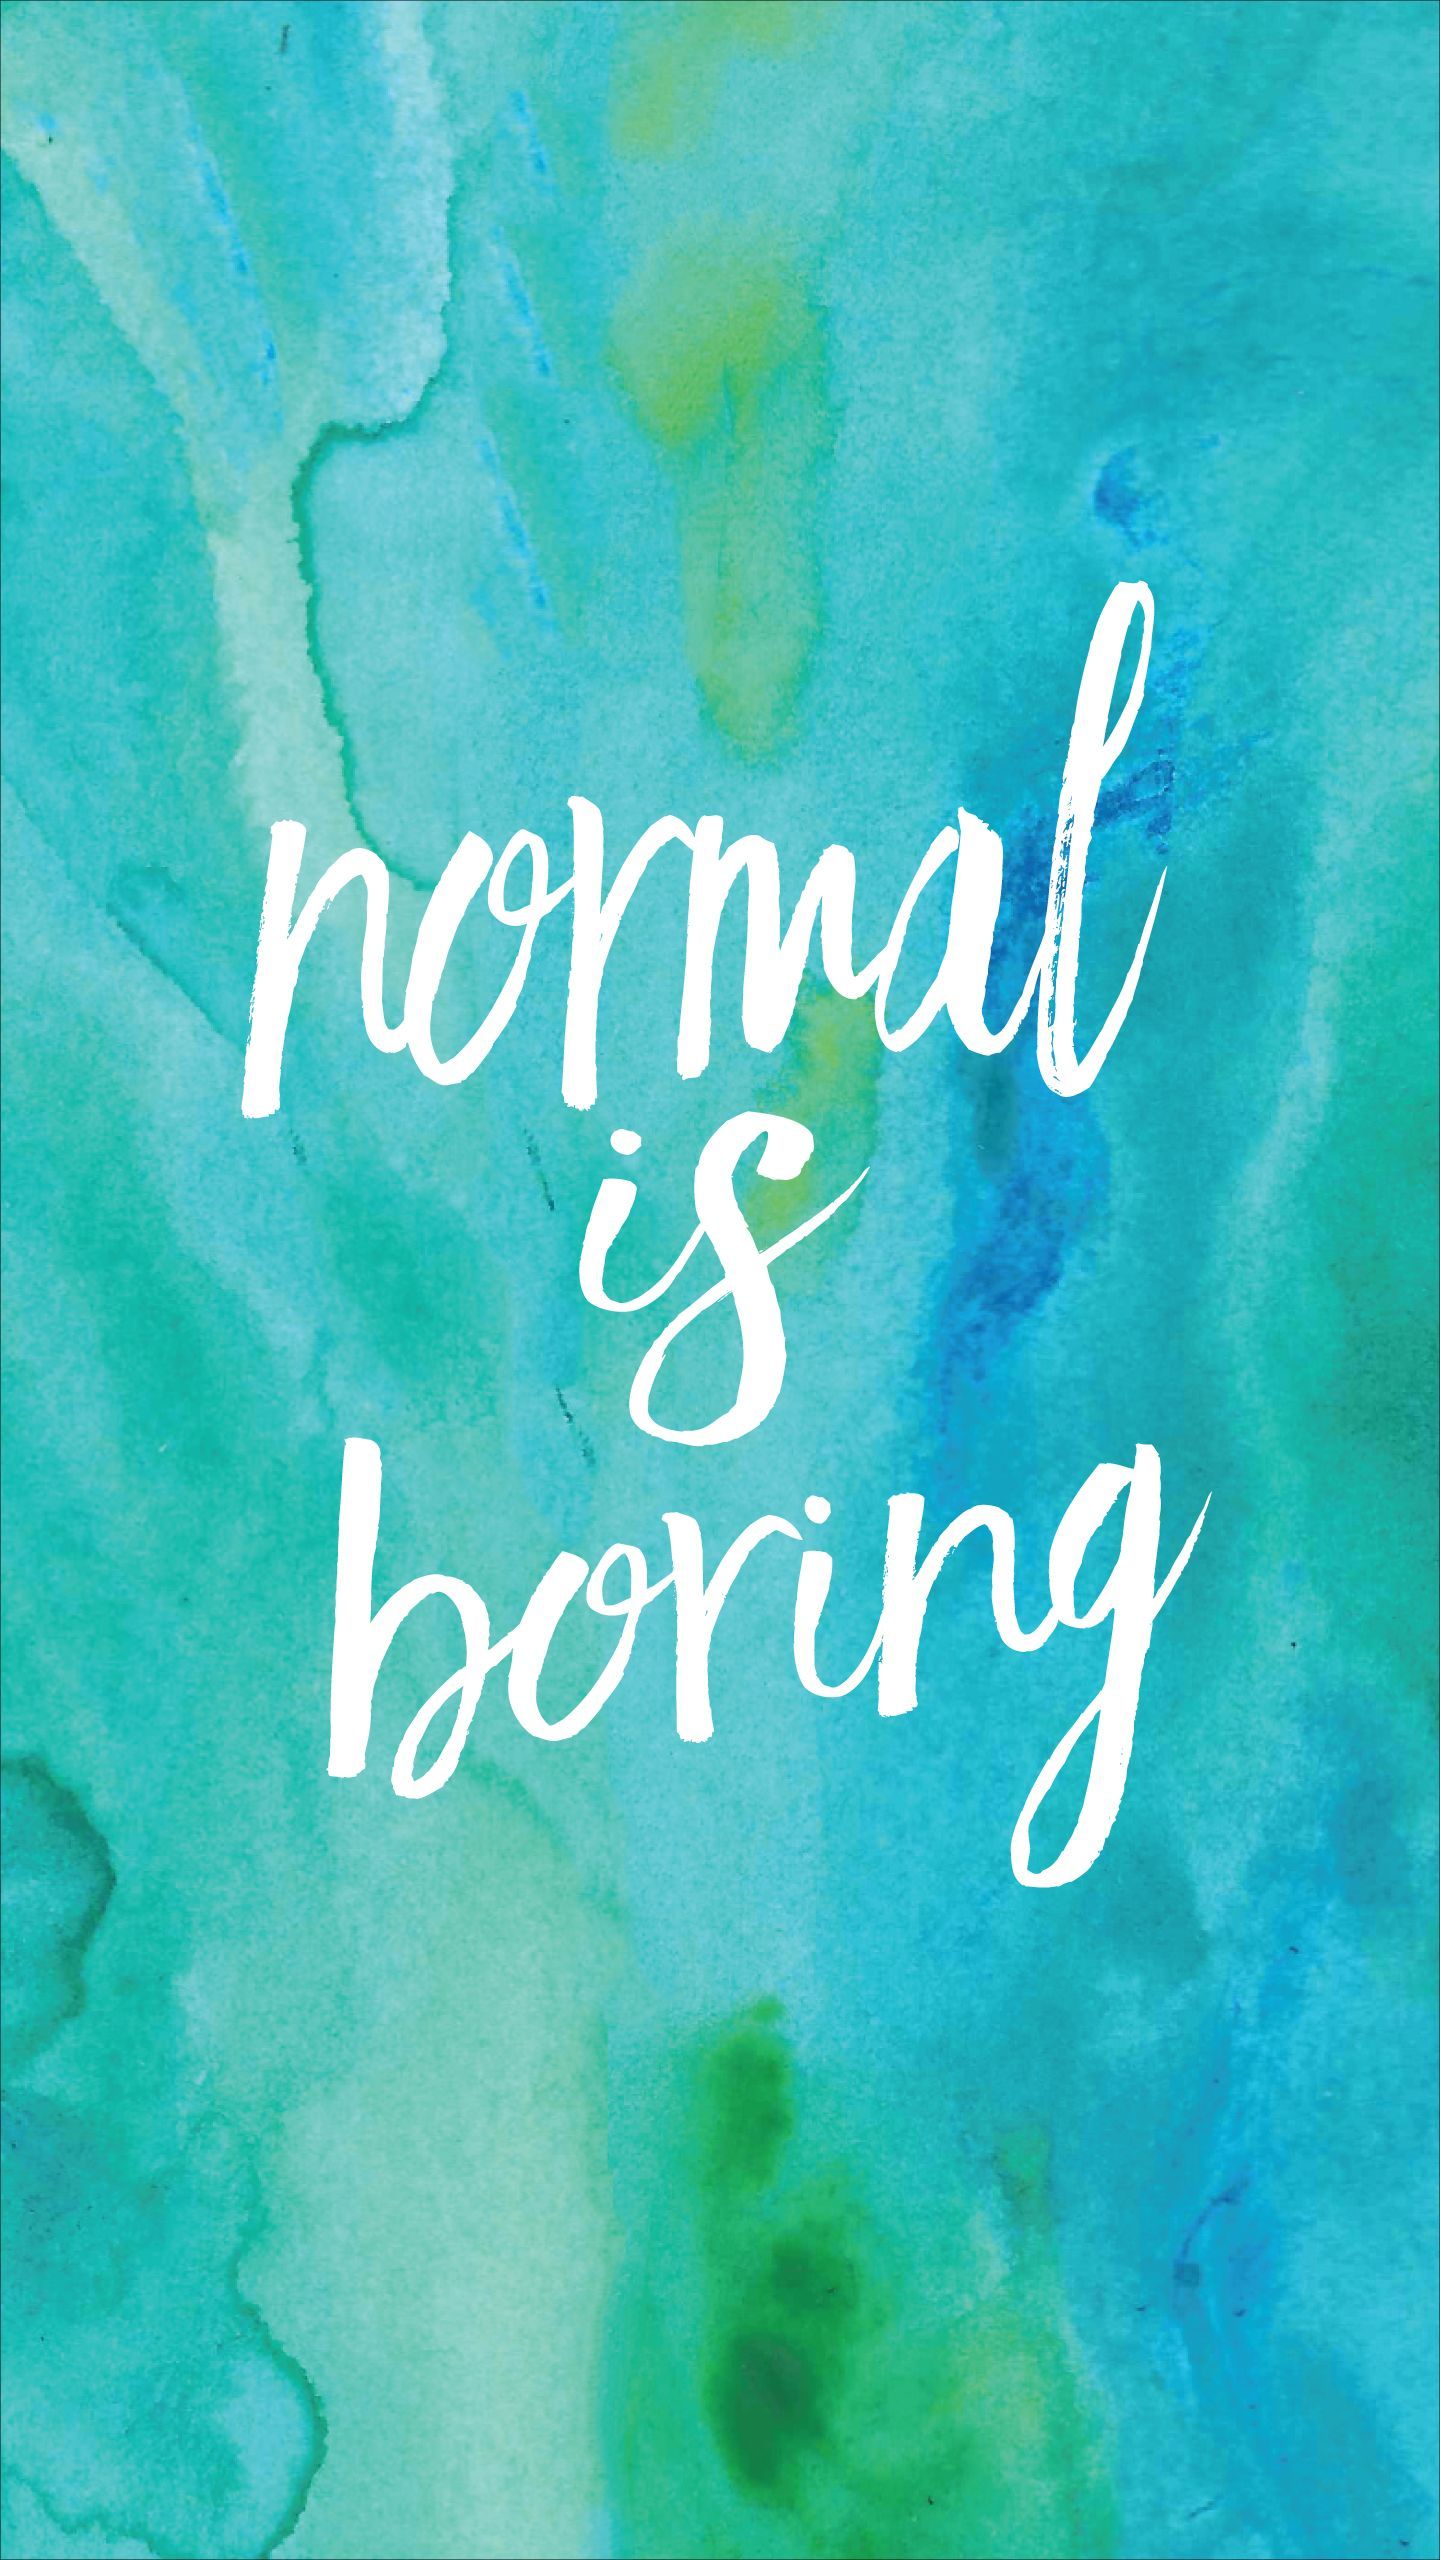 Being Normal Is Boring 4k hd-wallpapers, digital art wallpapers